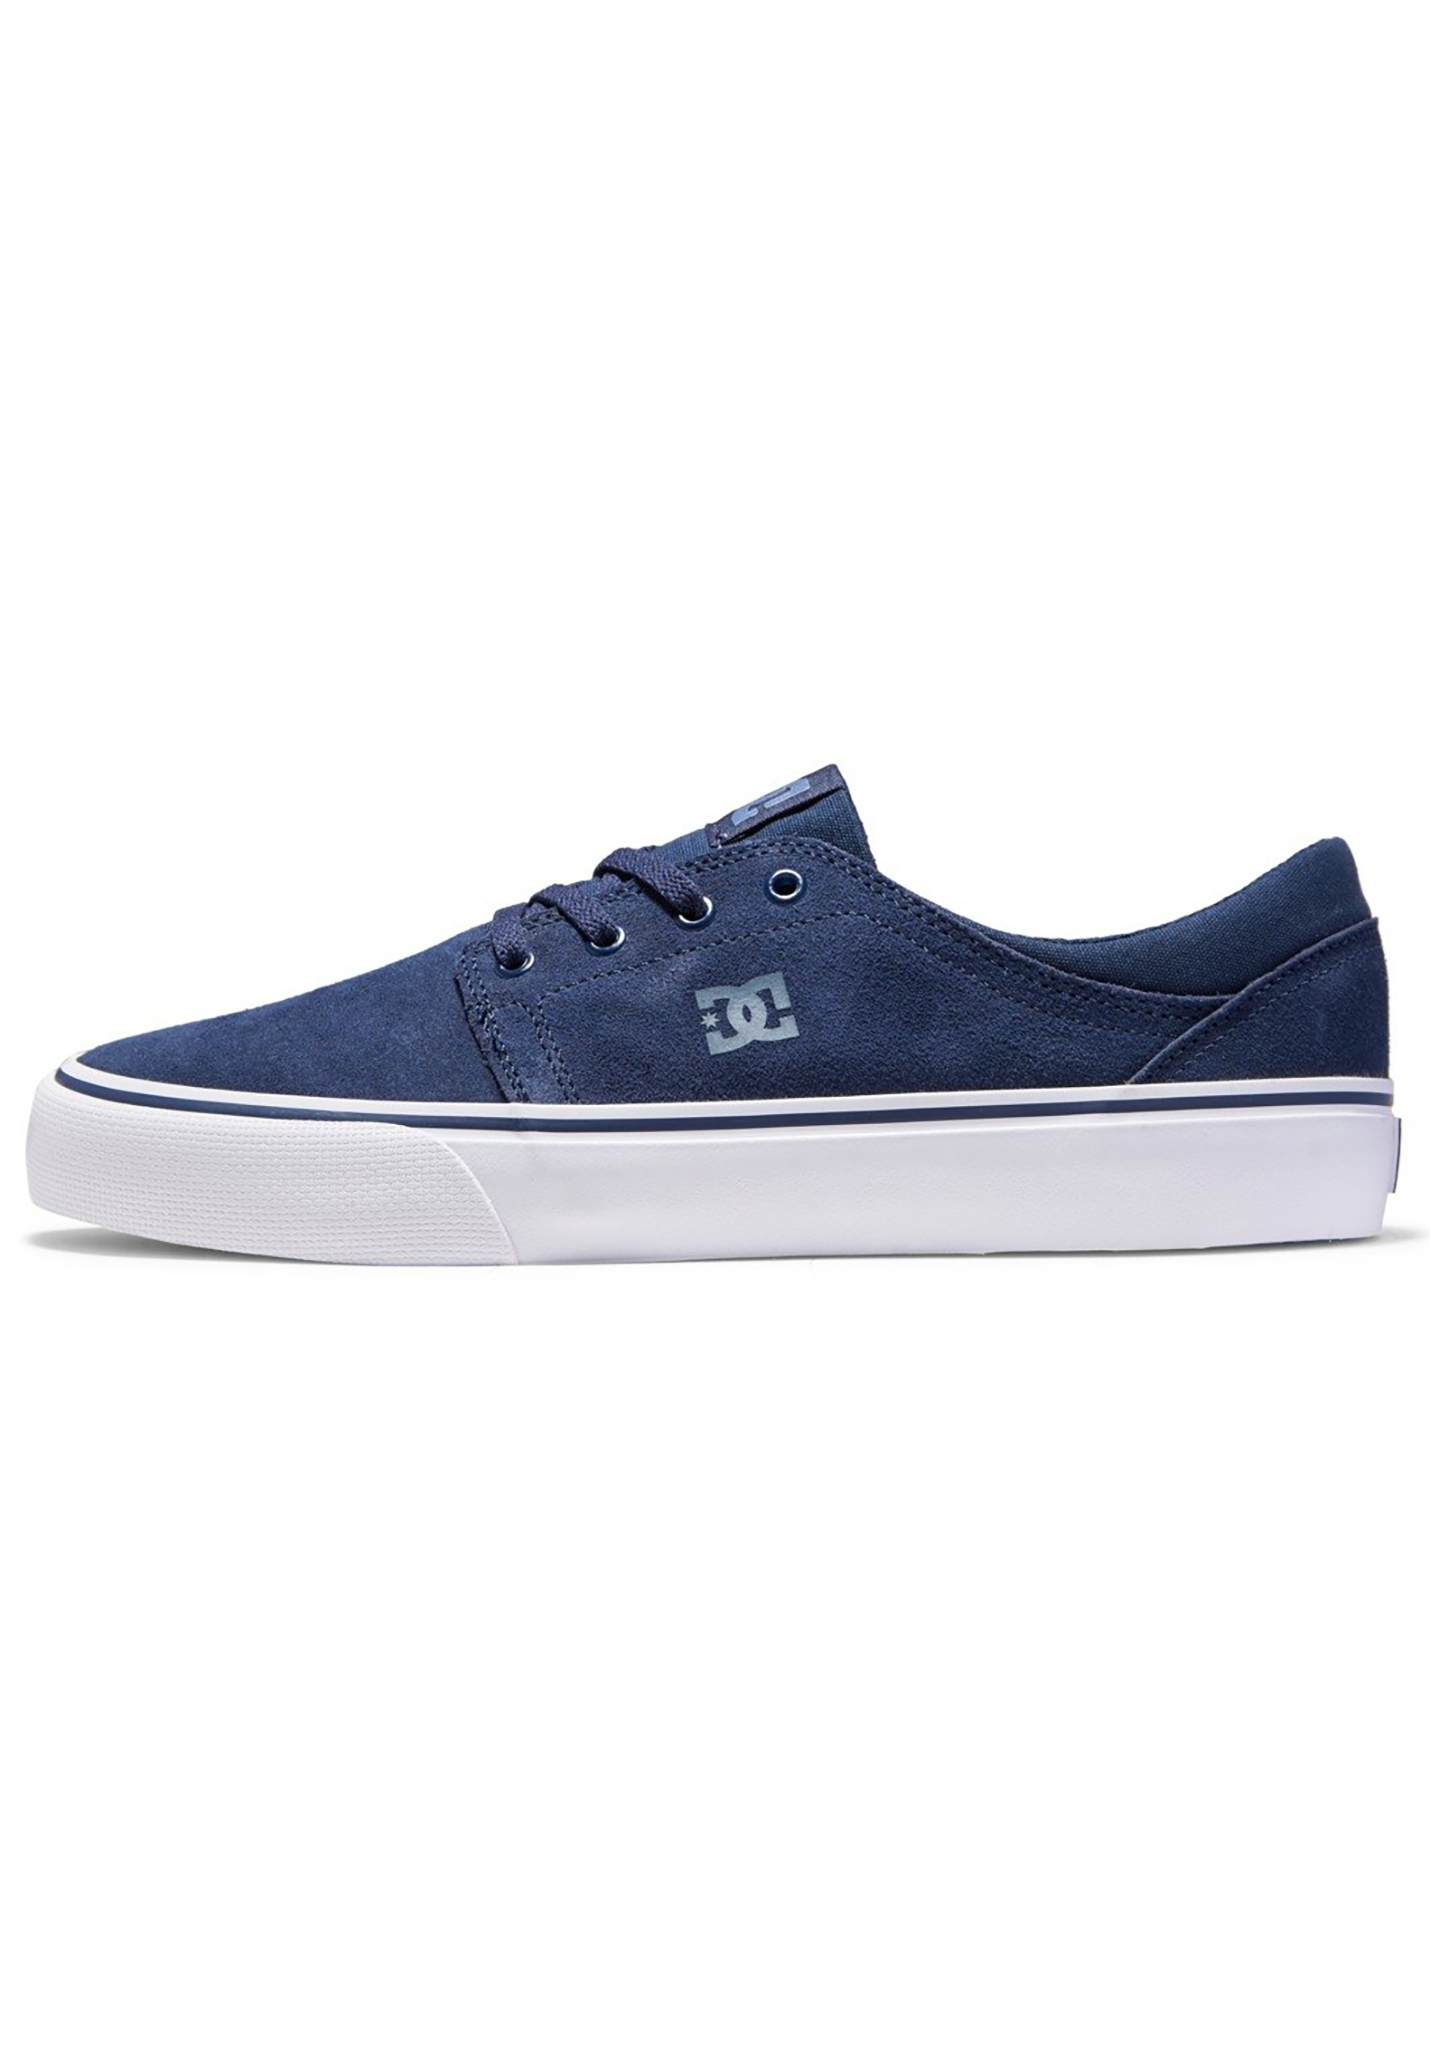 DC Trase Sneaker navy/blau/weiß 47